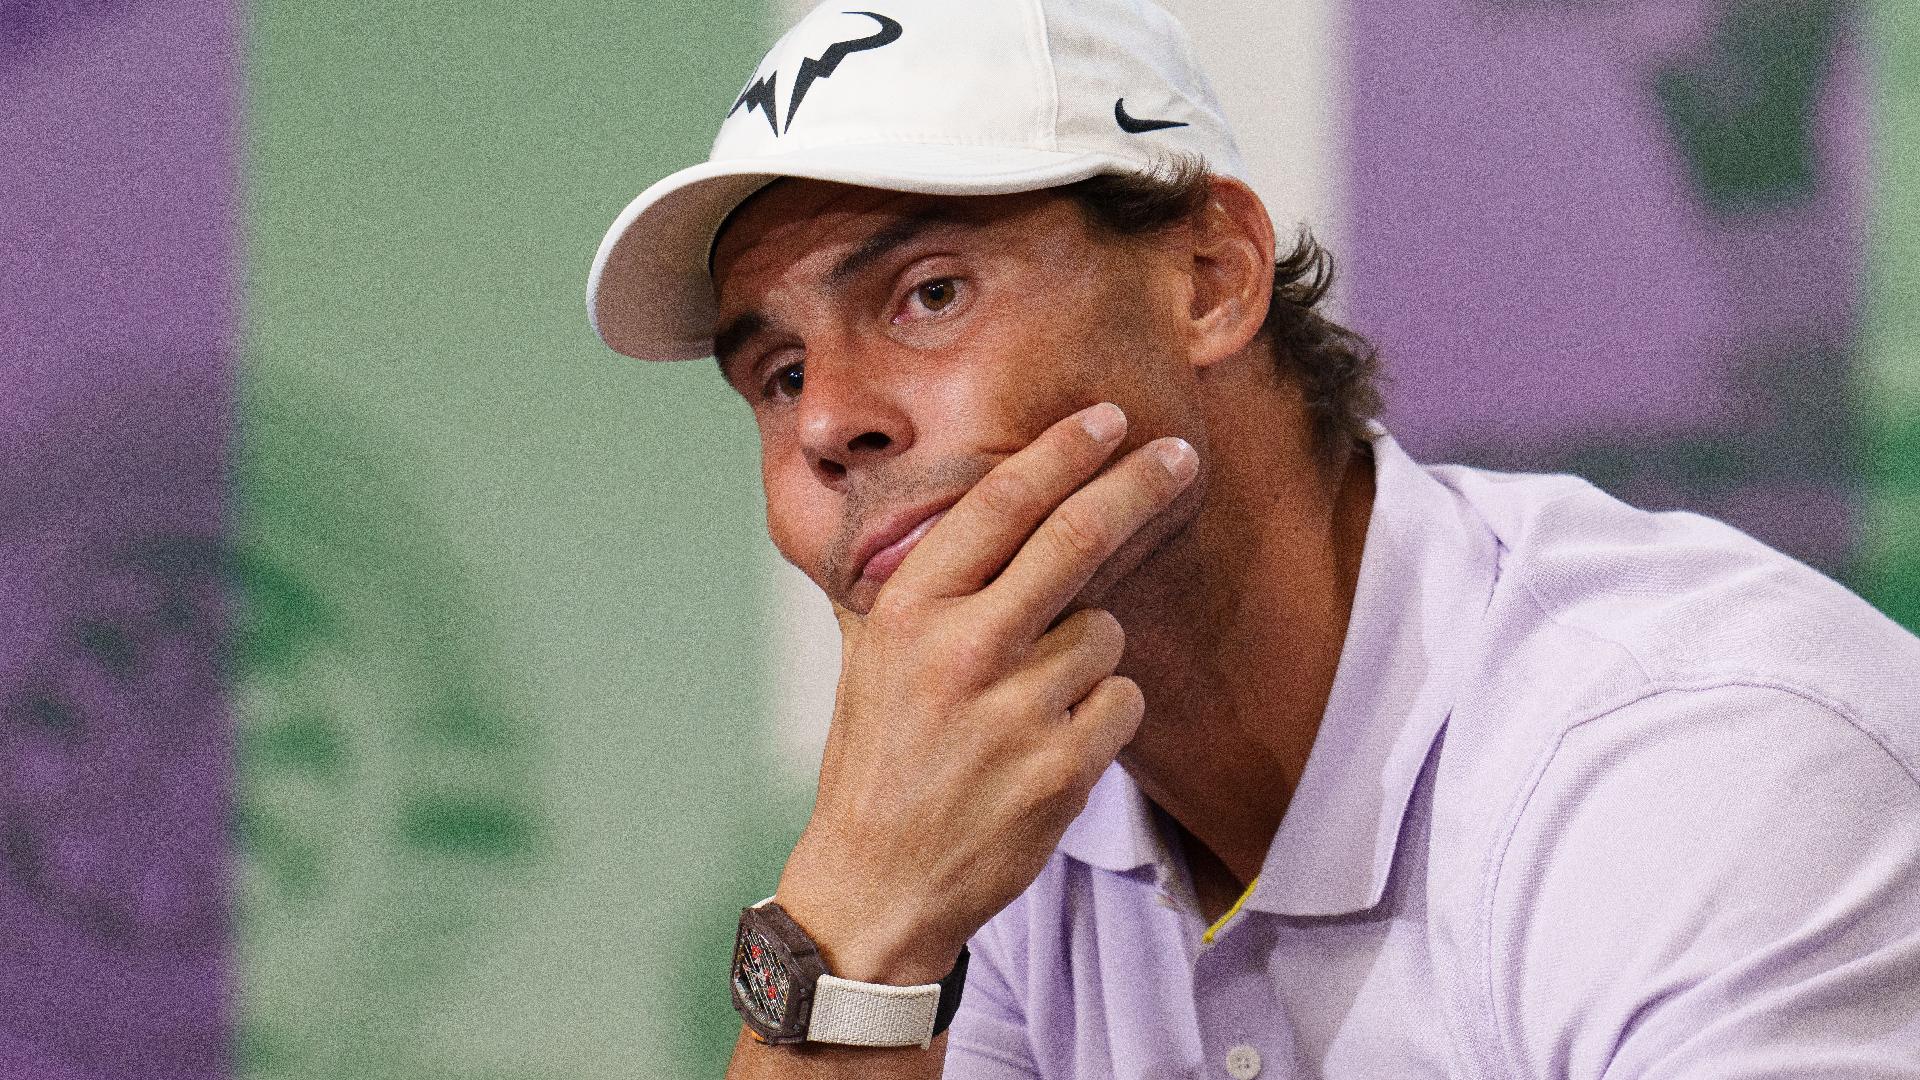 Rafael Nadal delays comeback from injury